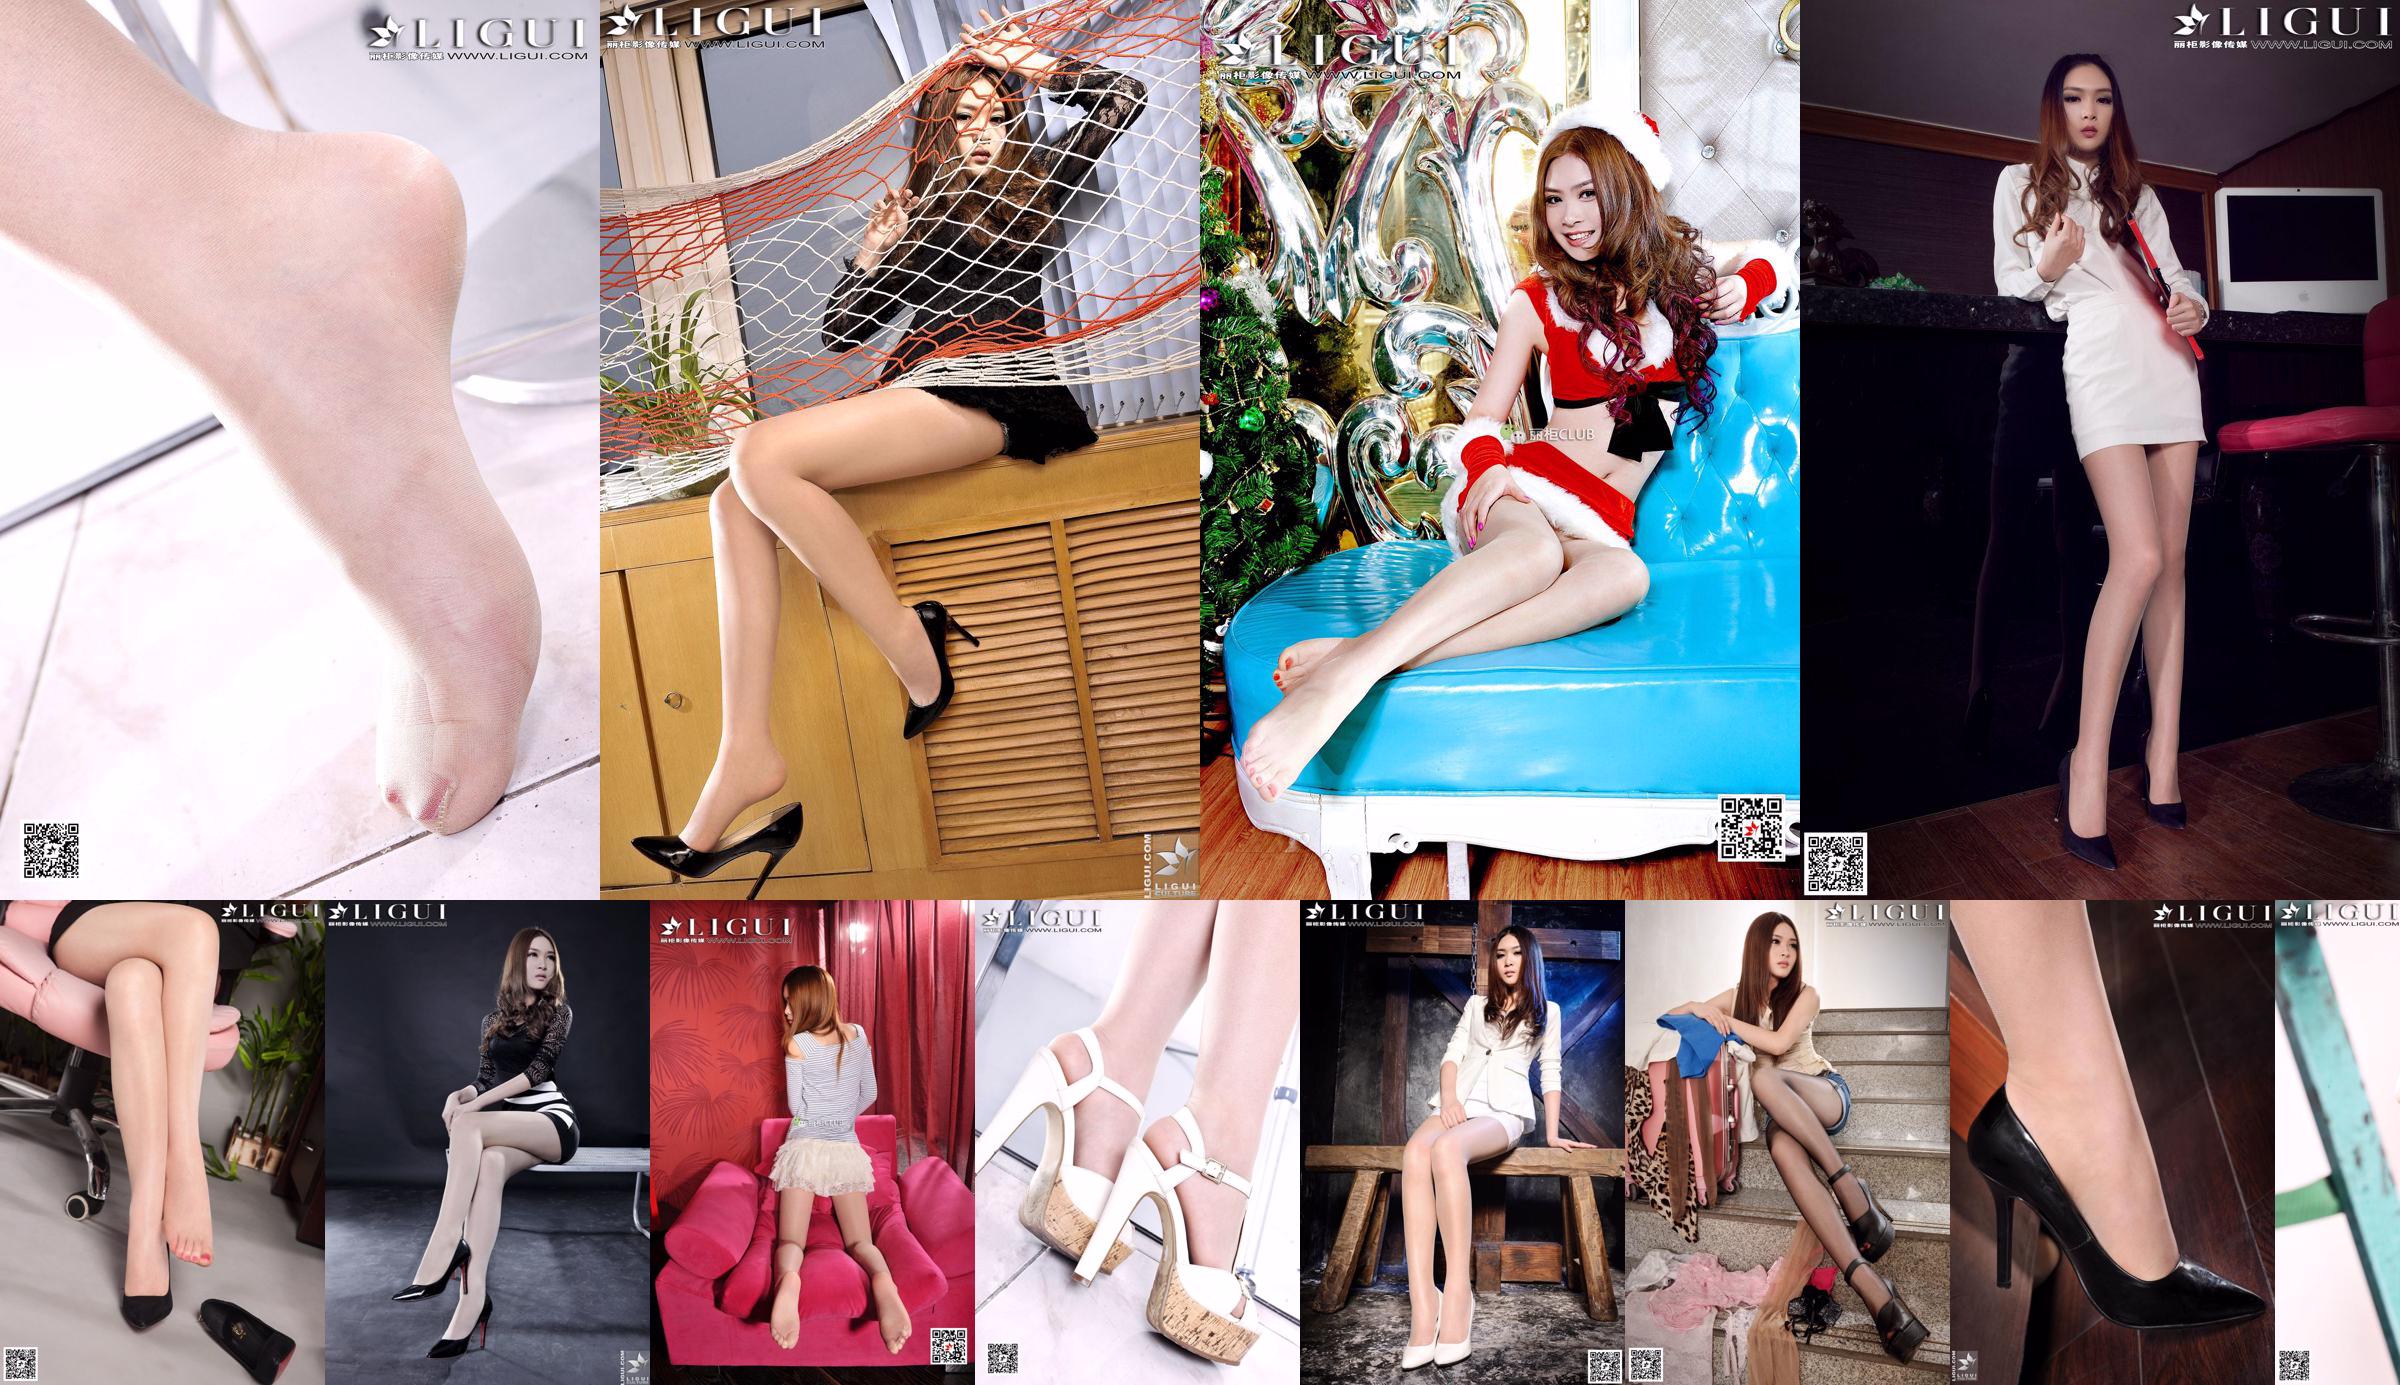 [丽 柜 Ligui] Model Yoona "Cheongsam na wysokim obcasie wieprzowym" No.37073b Strona 1